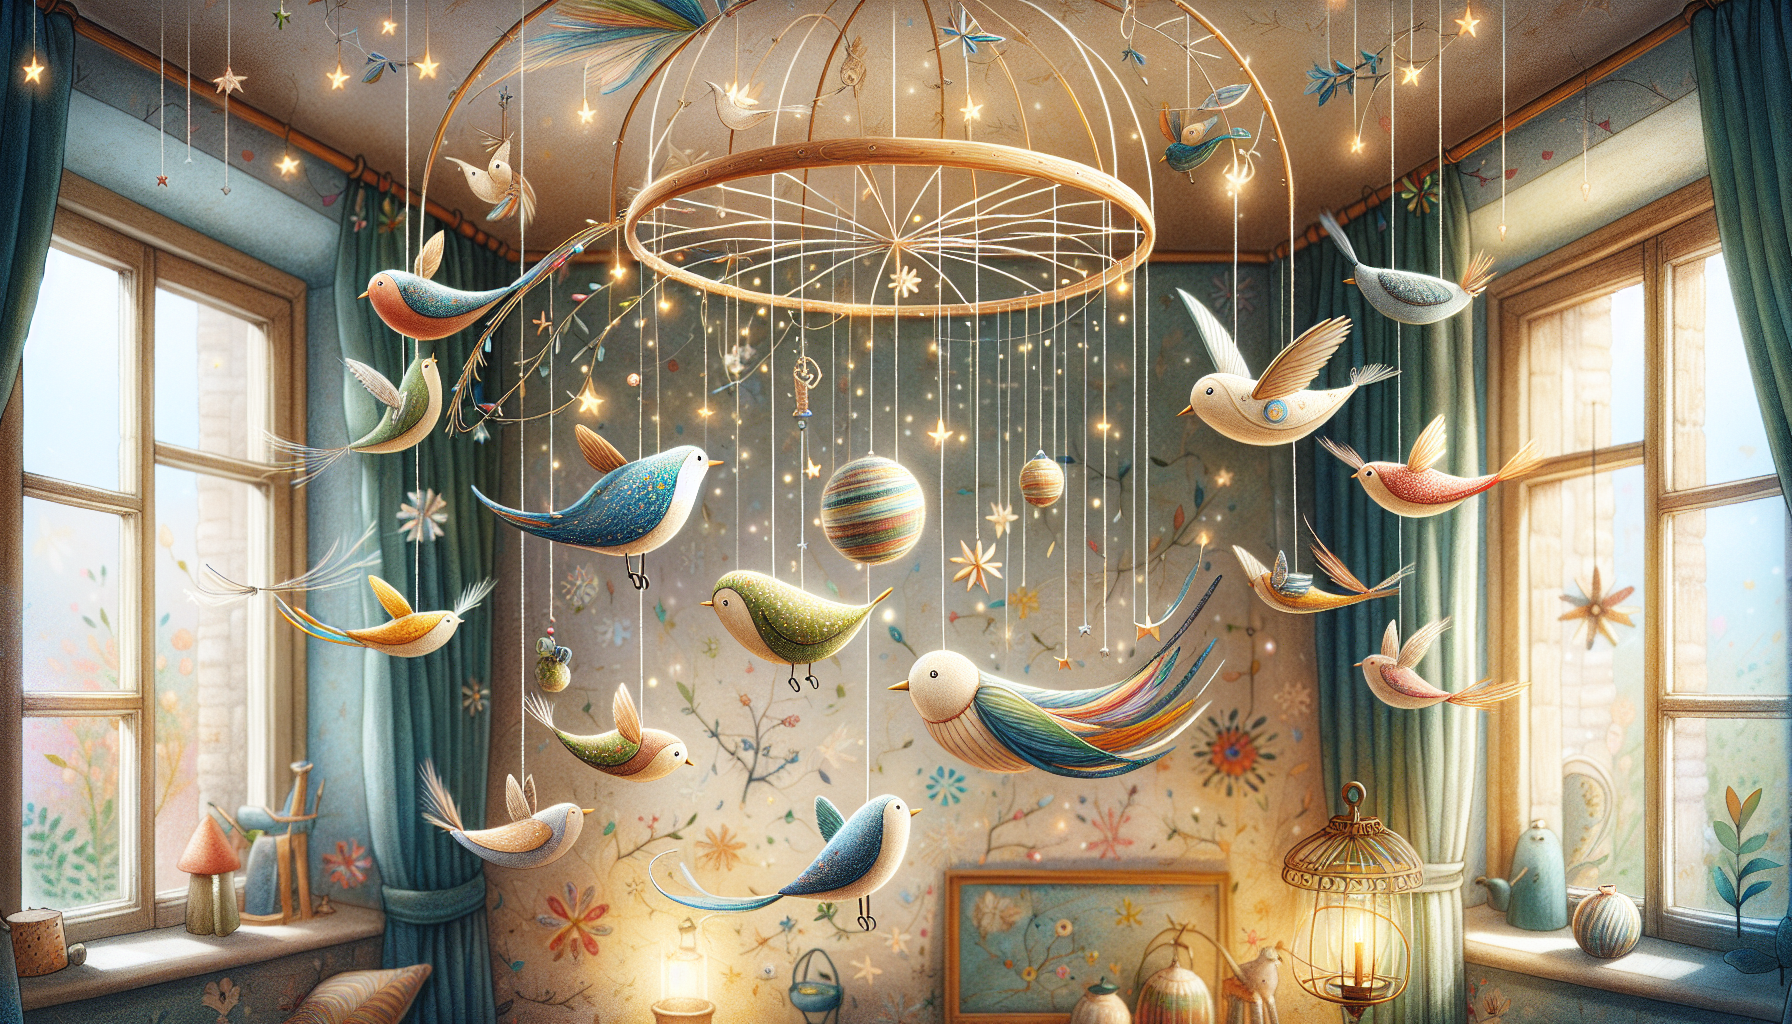 Creative ways to hang bird decor including intertwining fairy lights and crafting bird mobiles